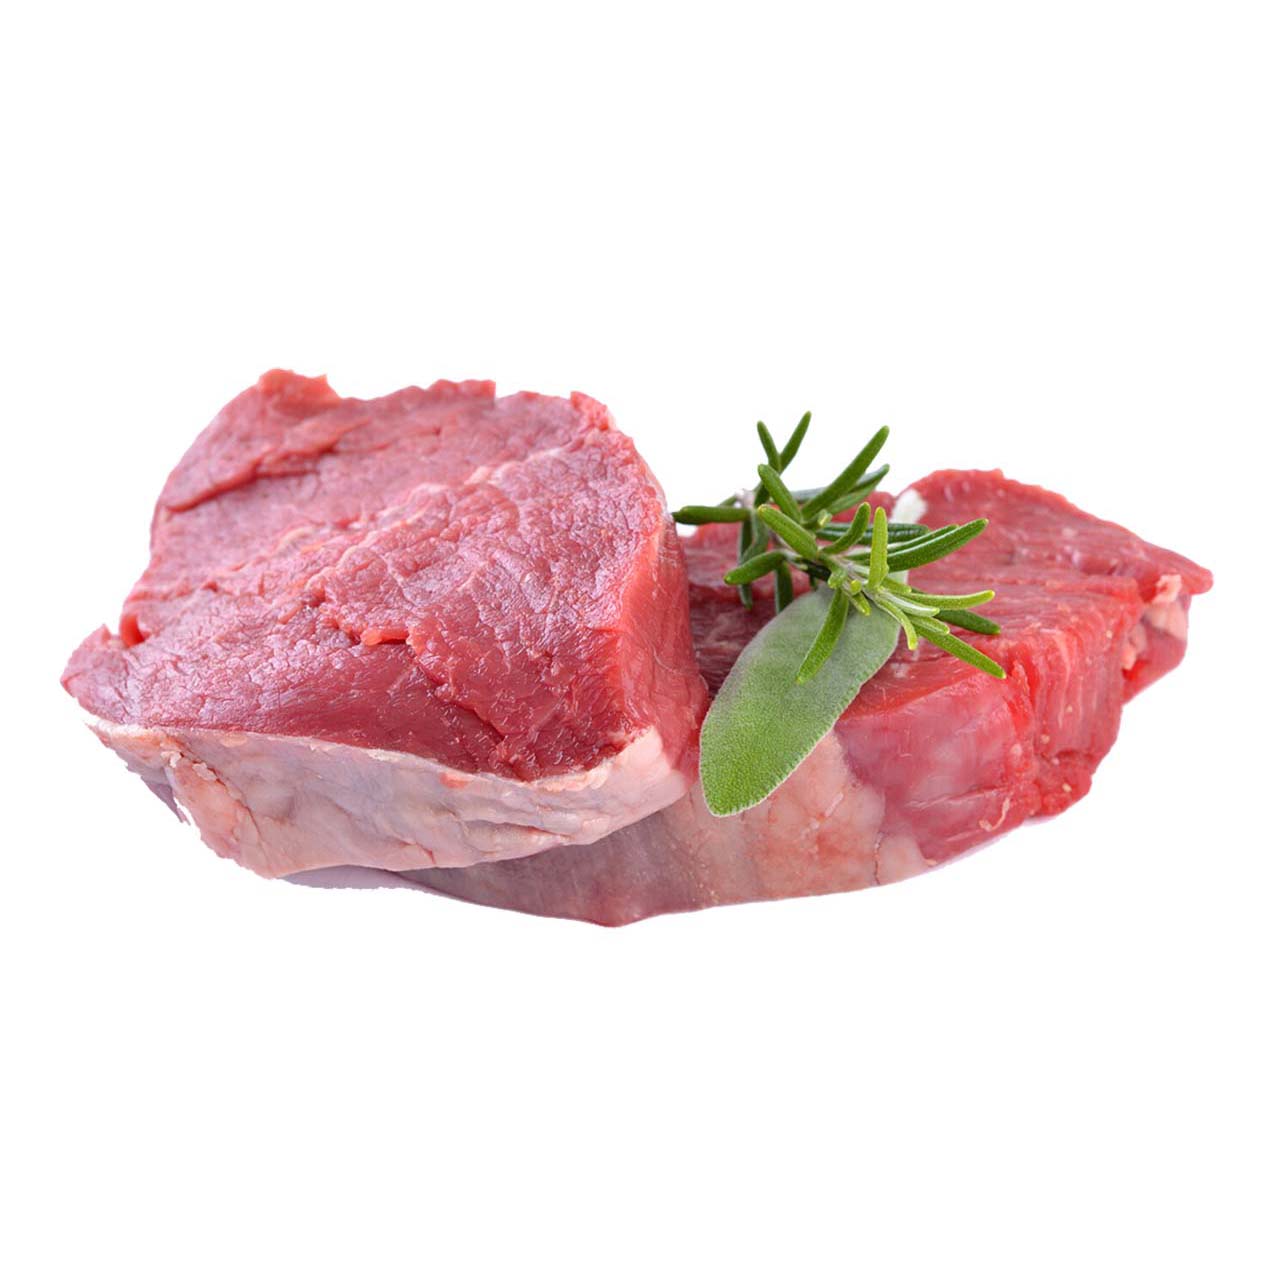 Beef Tenderloin - 6 oz. - Organic